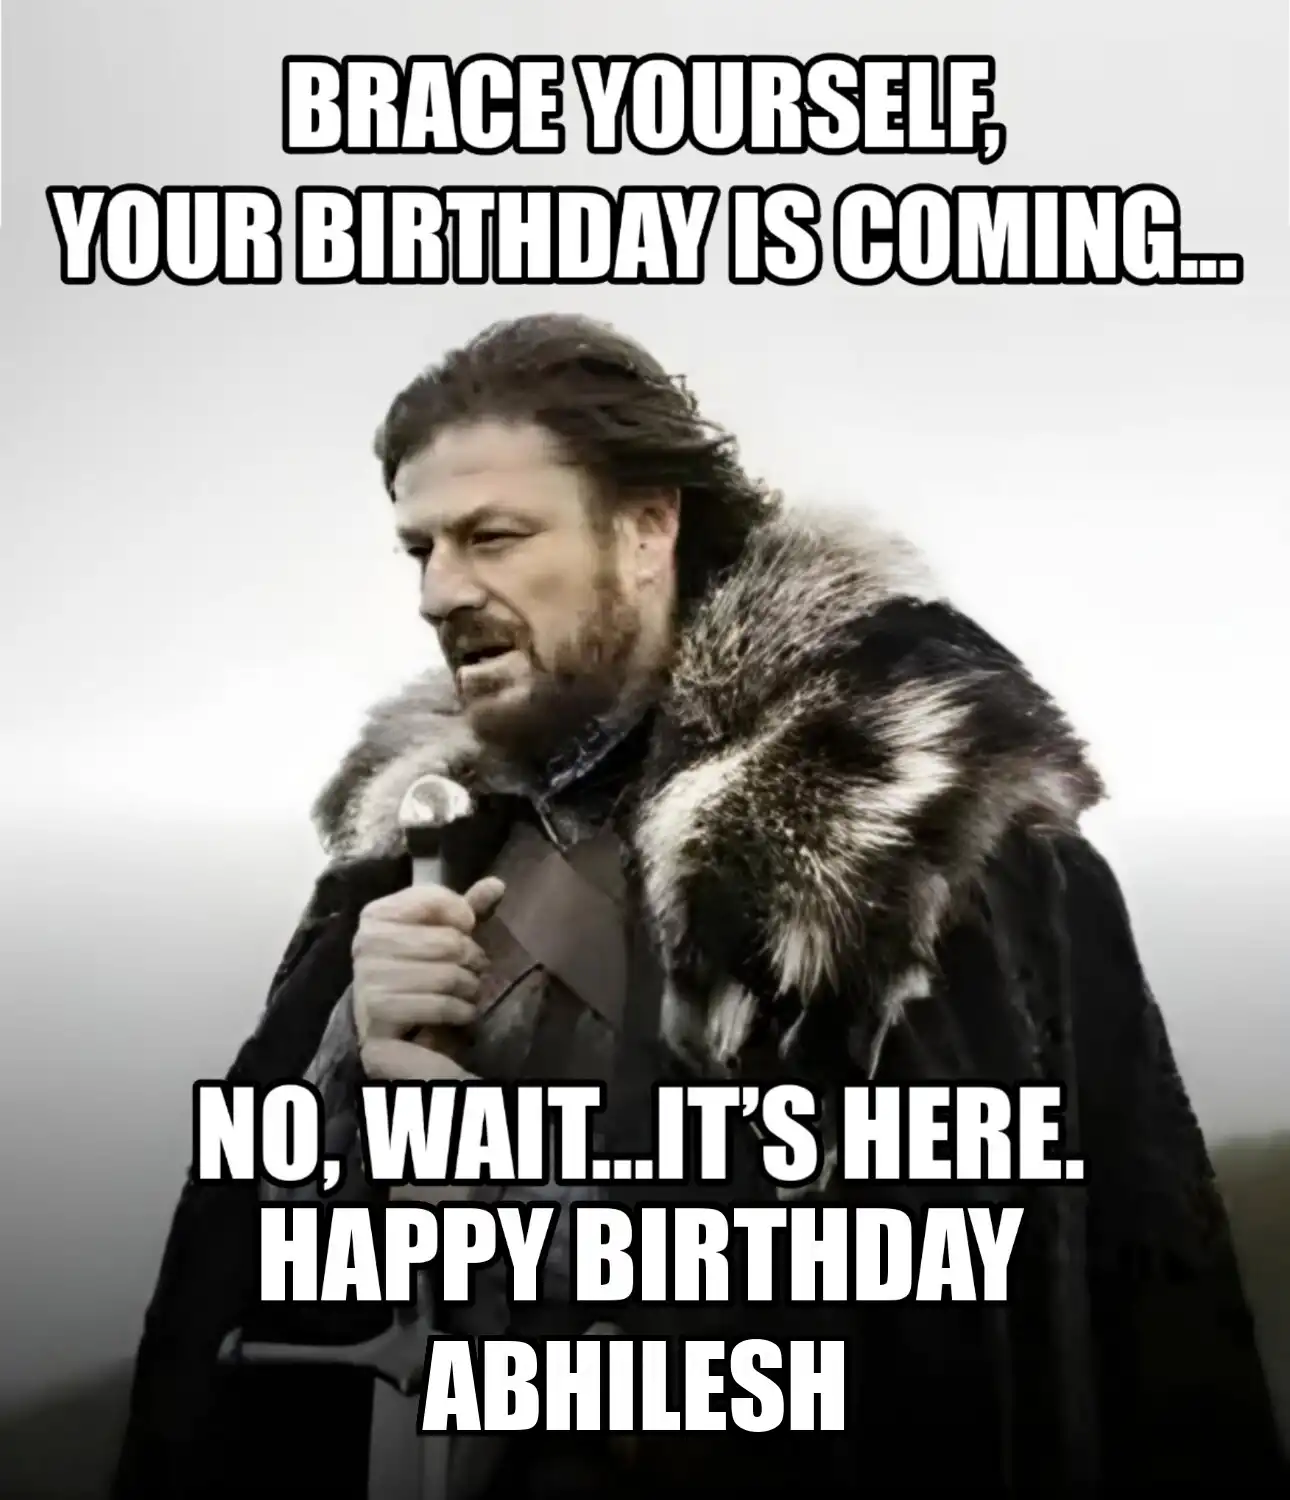 Happy Birthday Abhilesh Brace Yourself Your Birthday Is Coming Meme